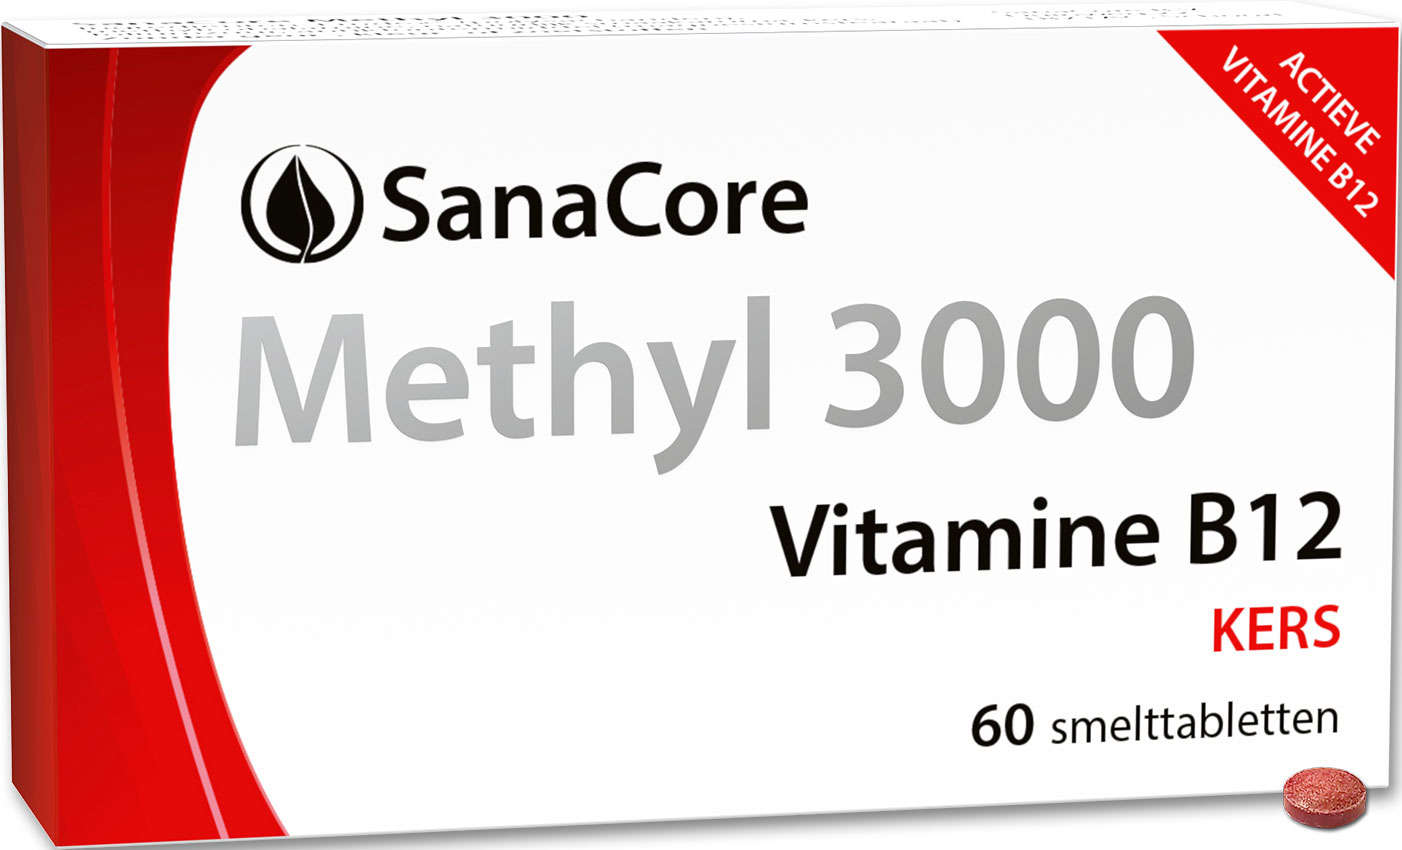 SanaCore Methyl 3000 ZONDER FOLIUMZUUR